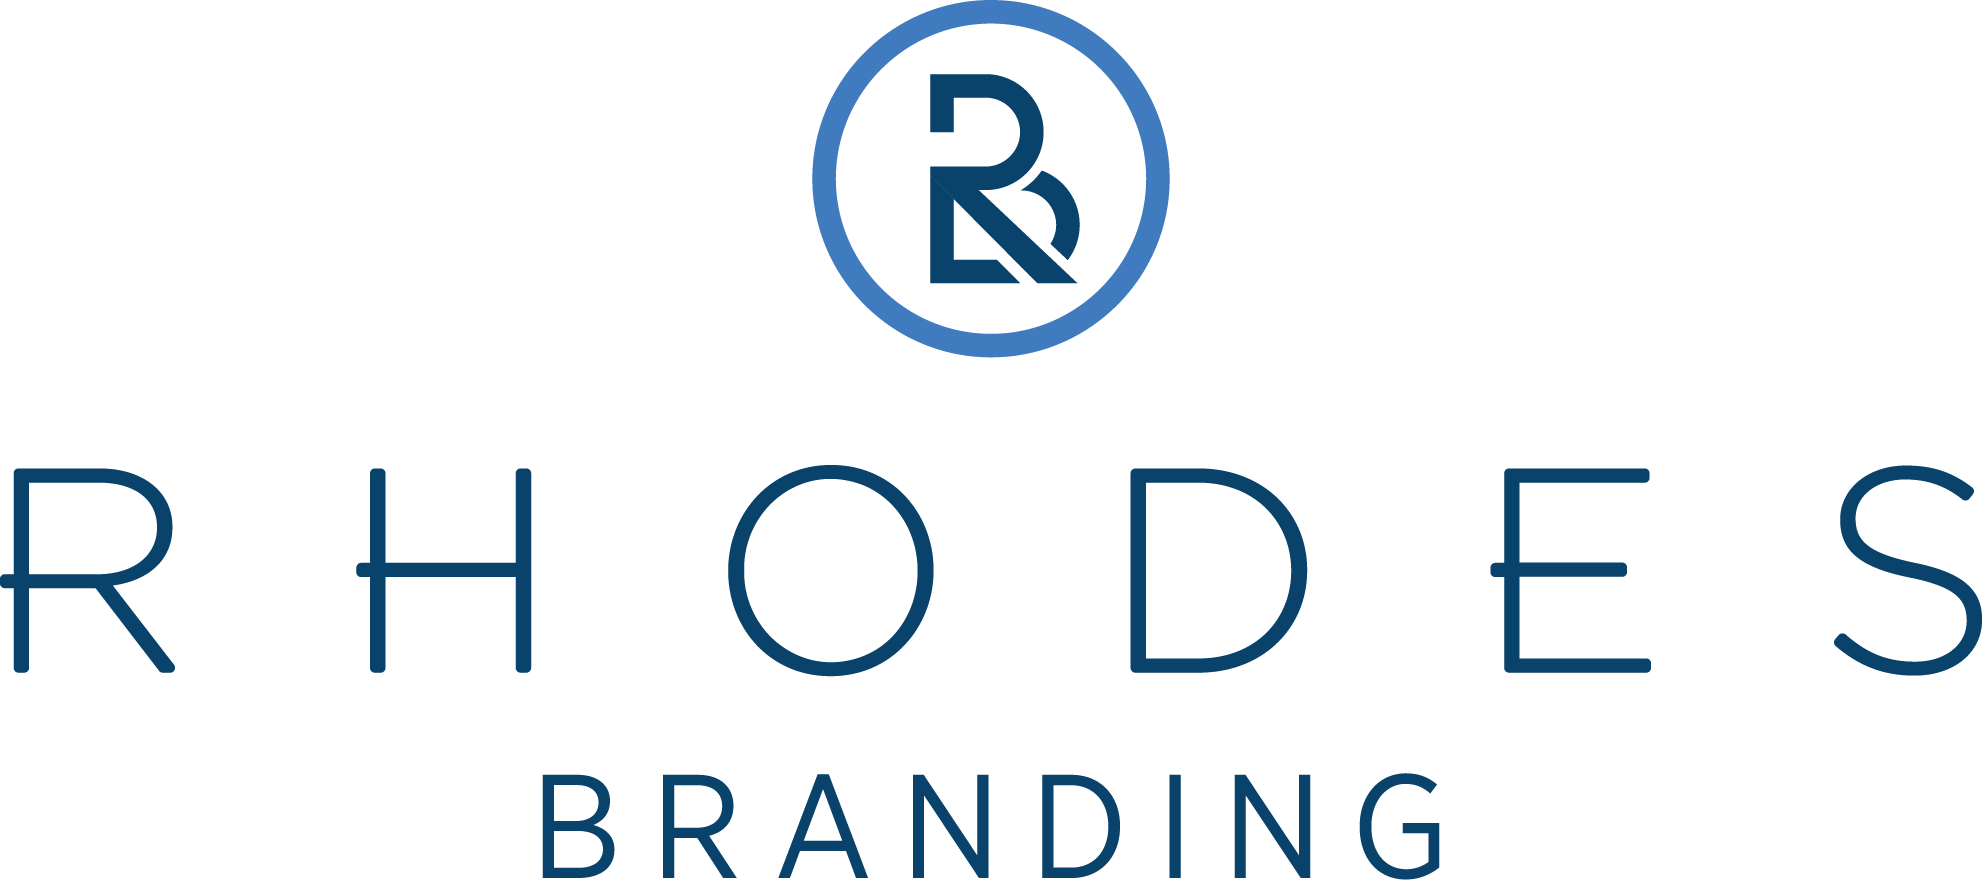 RhodesBranding_FINAL_Logo_Color.png